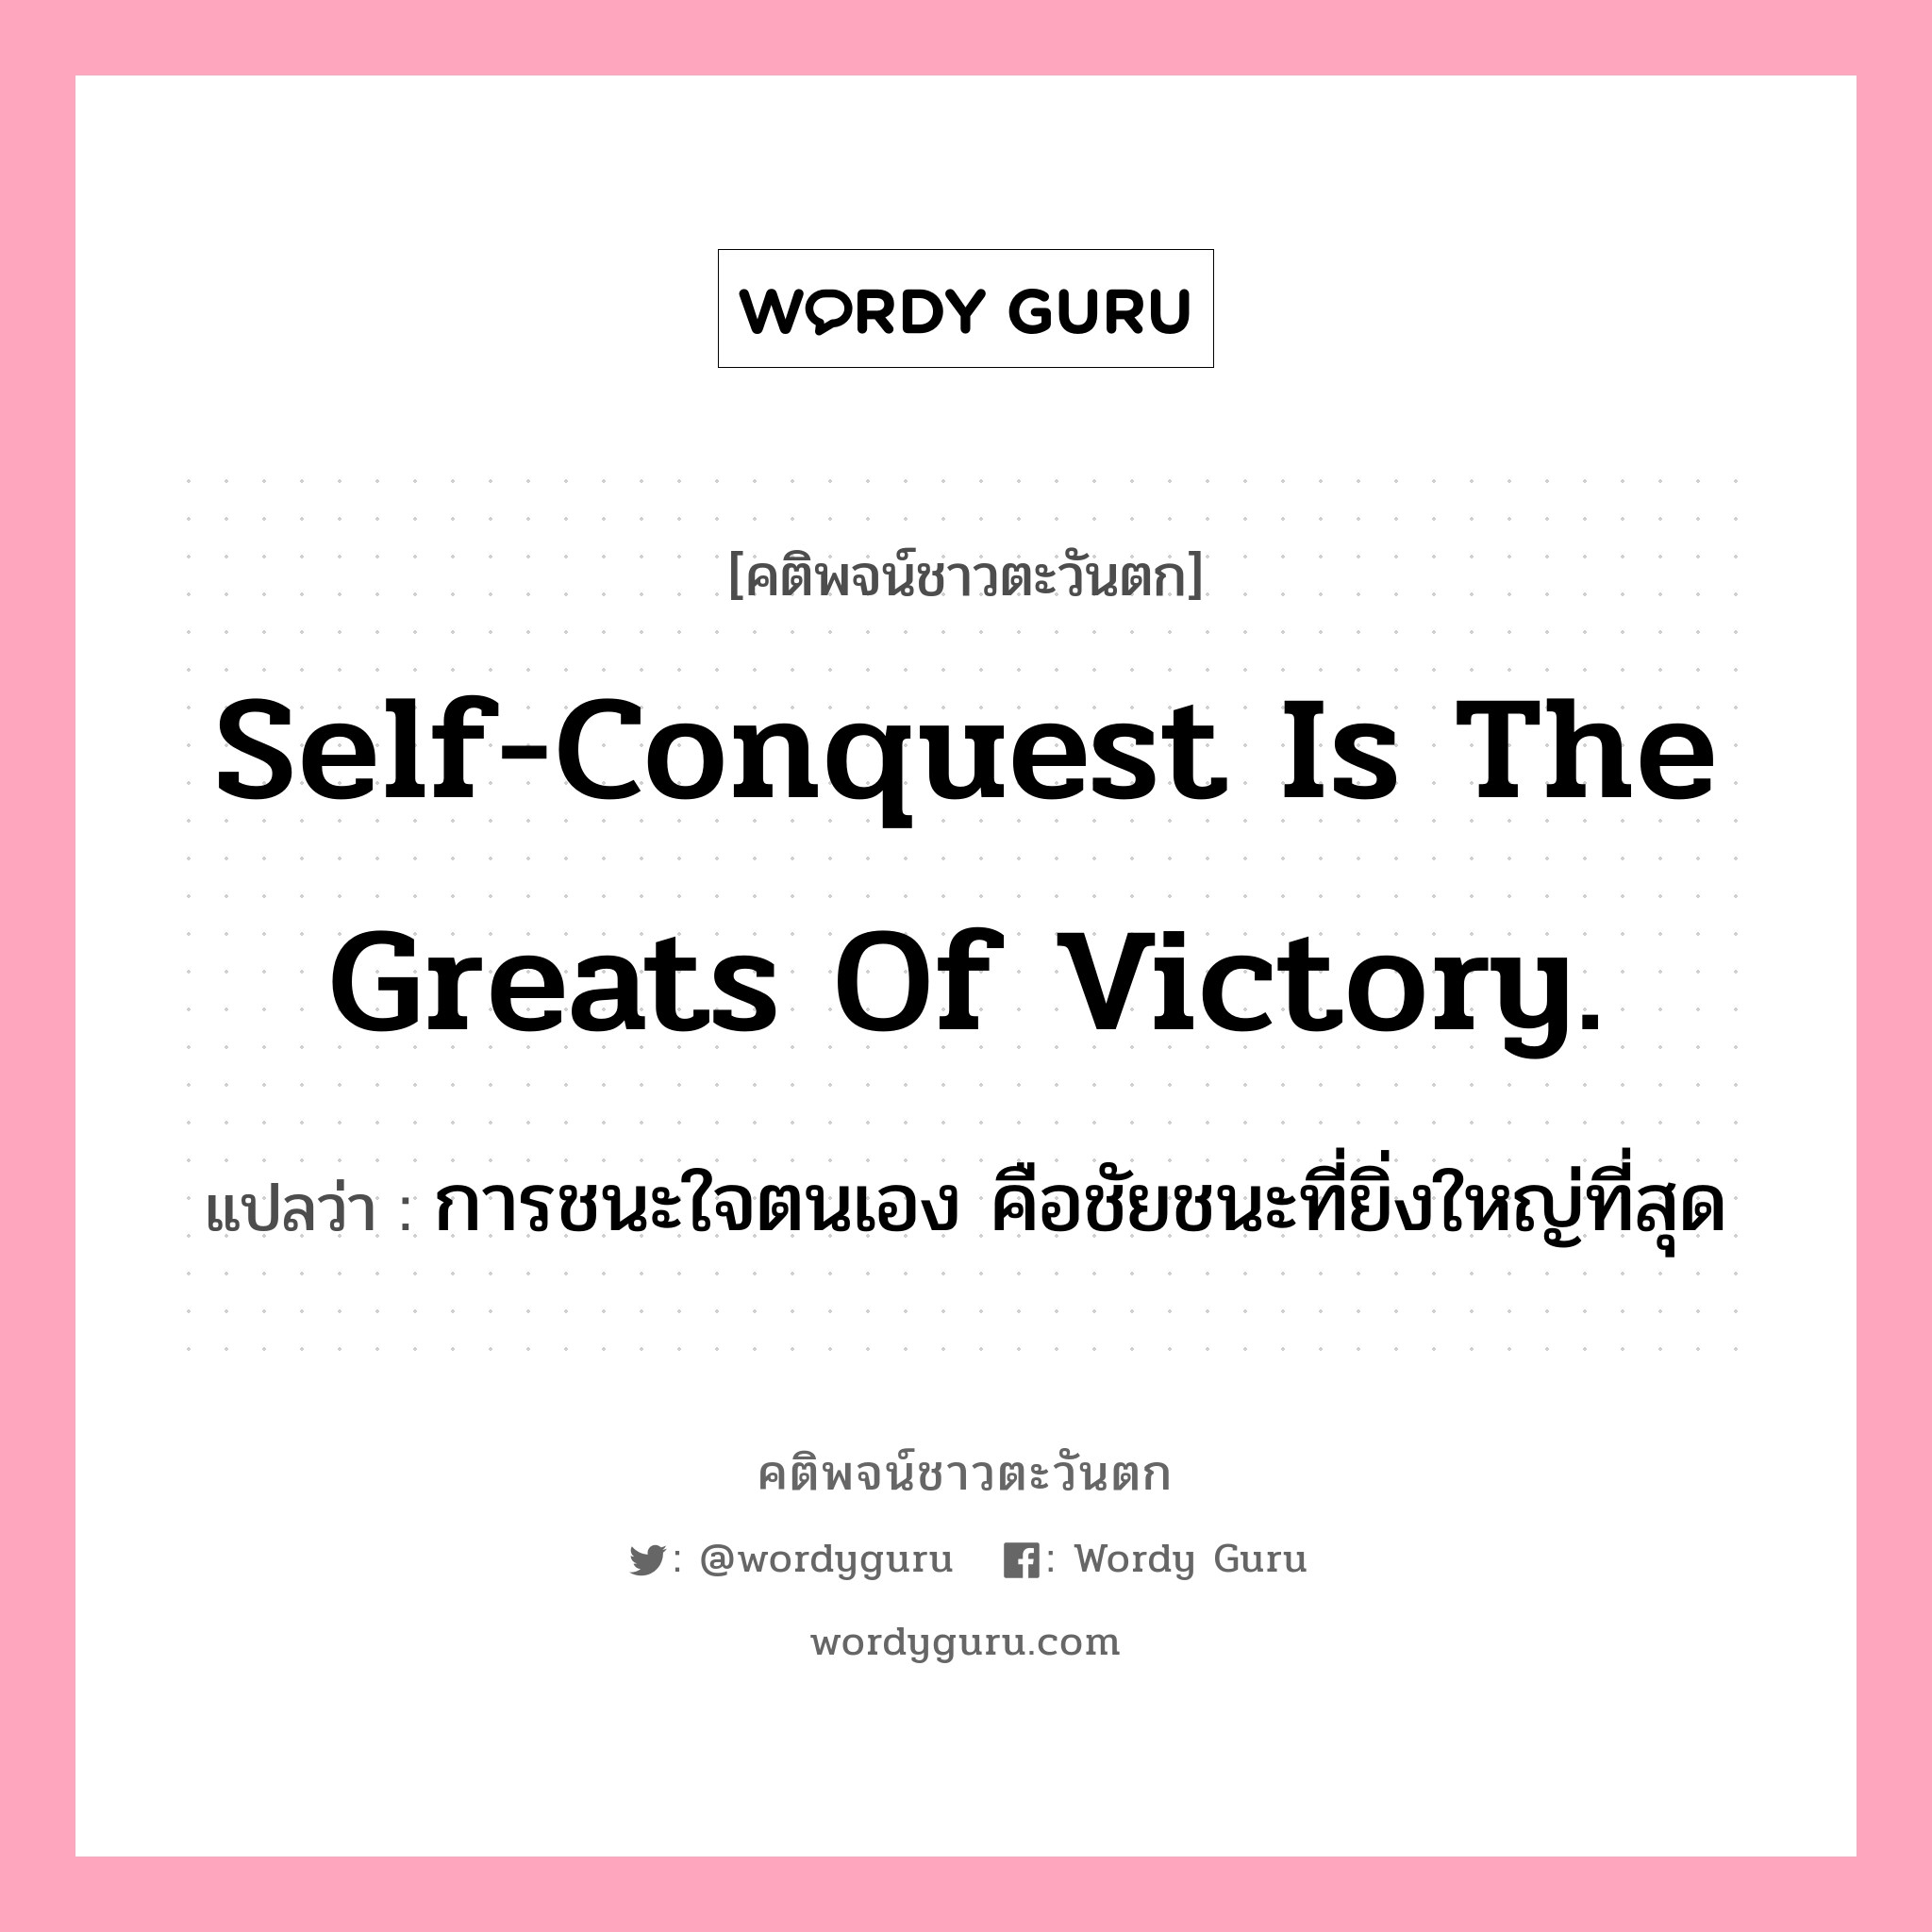 Self-conquest is the greats of victory., คติพจน์ชาวตะวันตก Self-conquest is the greats of victory. แปลว่า การชนะใจตนเอง คือชัยชนะที่ยิ่งใหญ่ที่สุด